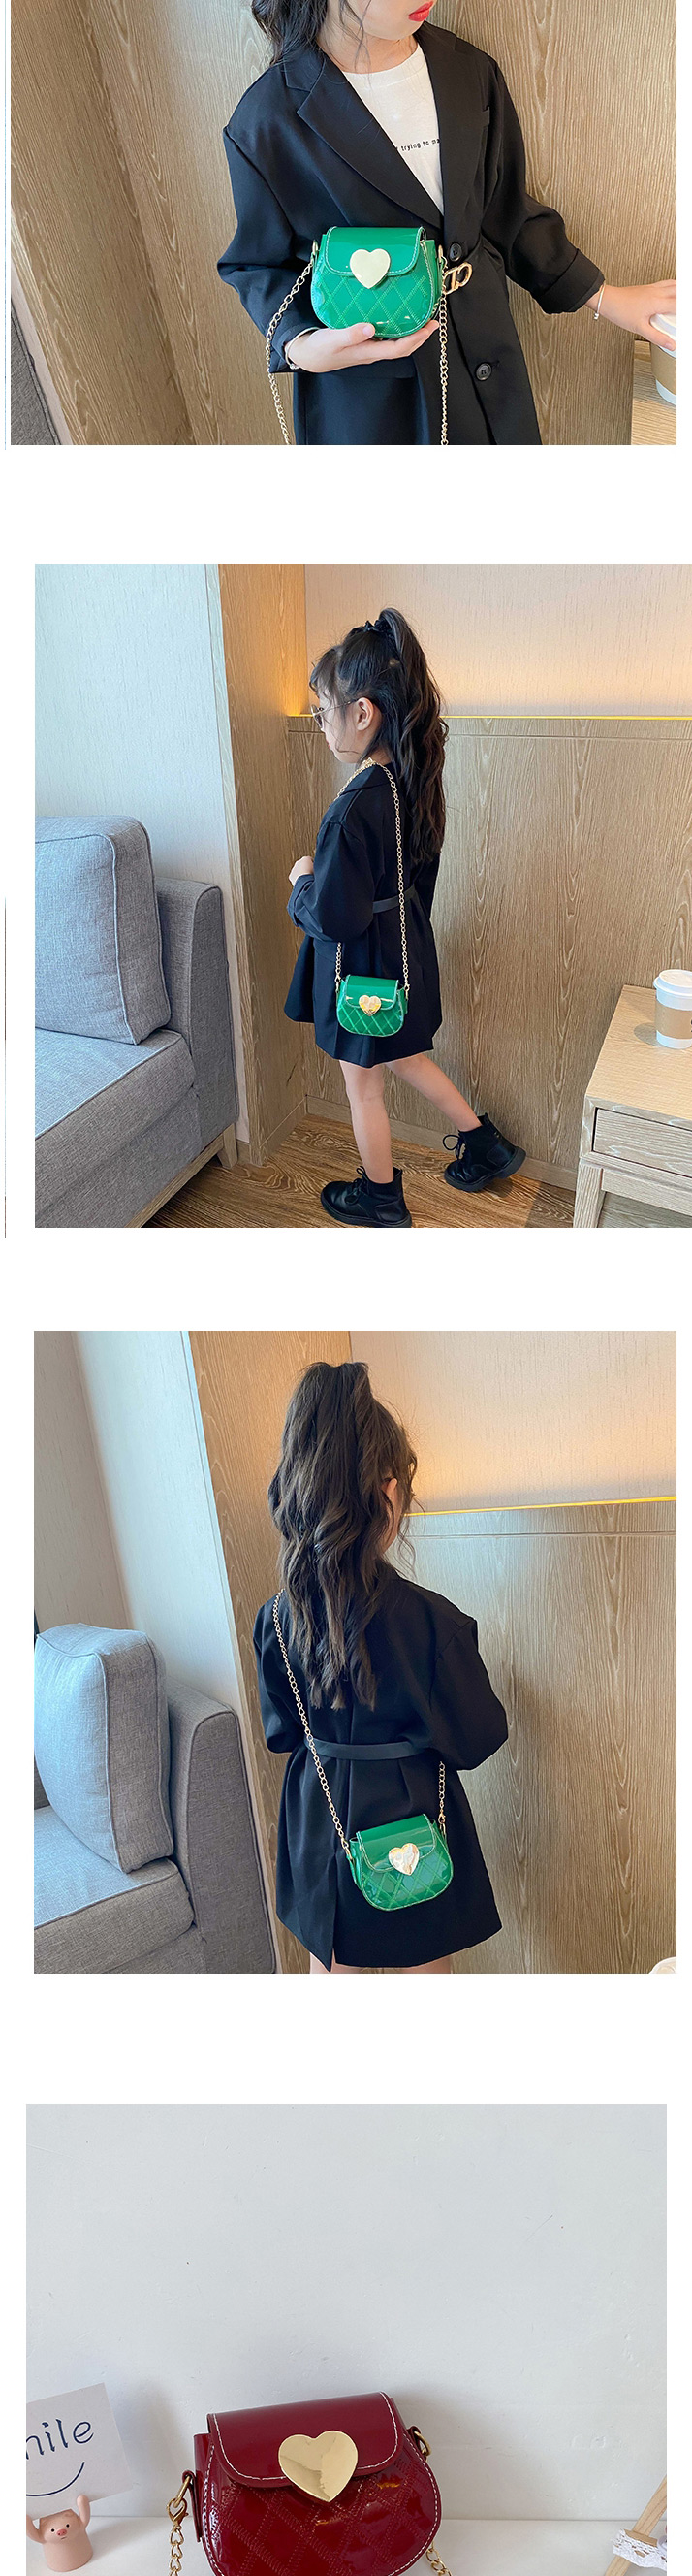 Fashion Black Childrens One-shoulder Diagonal Bag With Chain Love Lock,Shoulder bags